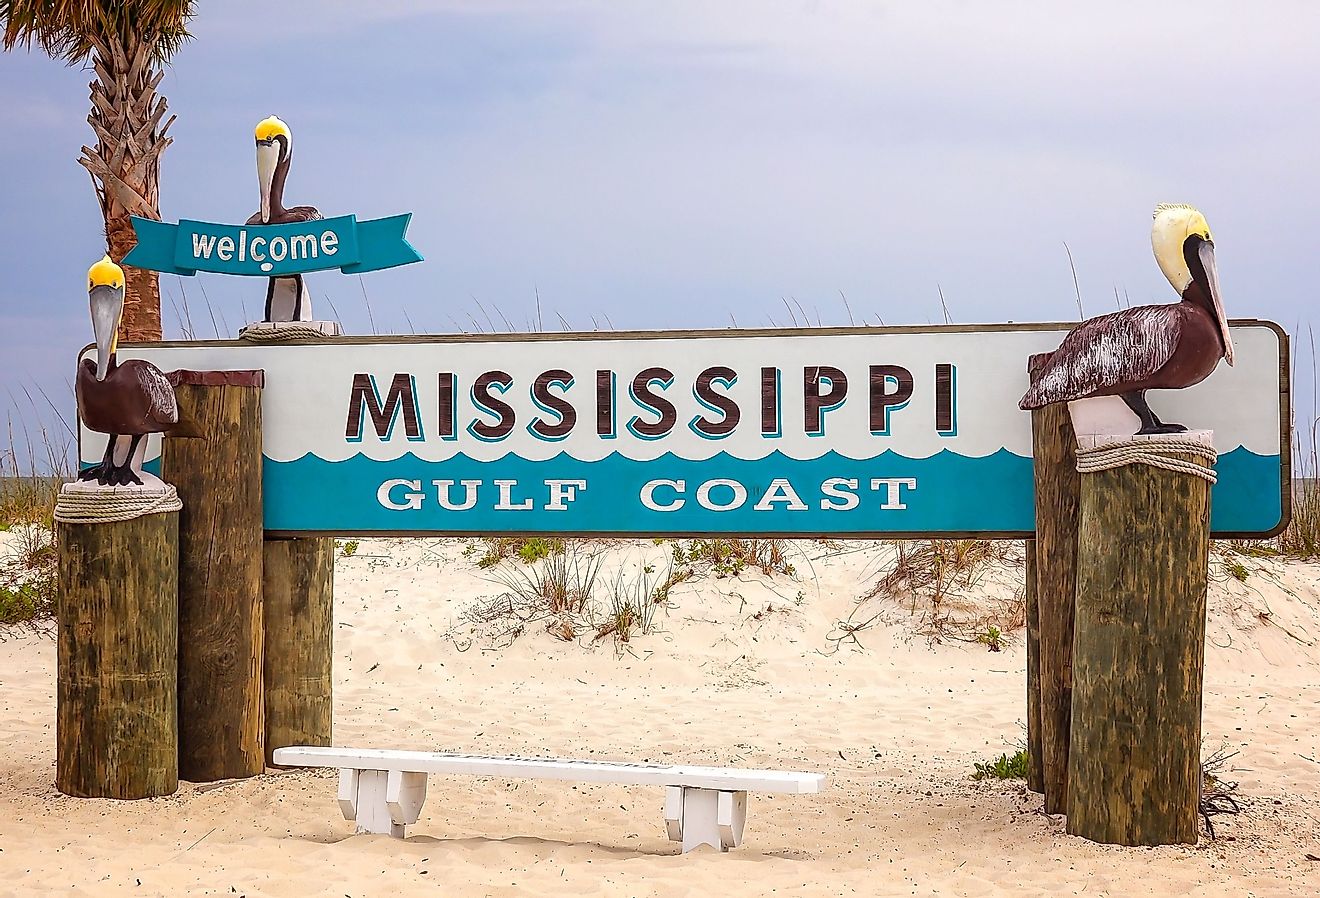 Mississippi Gulf Coast sign in Biloxi, Mississippi.